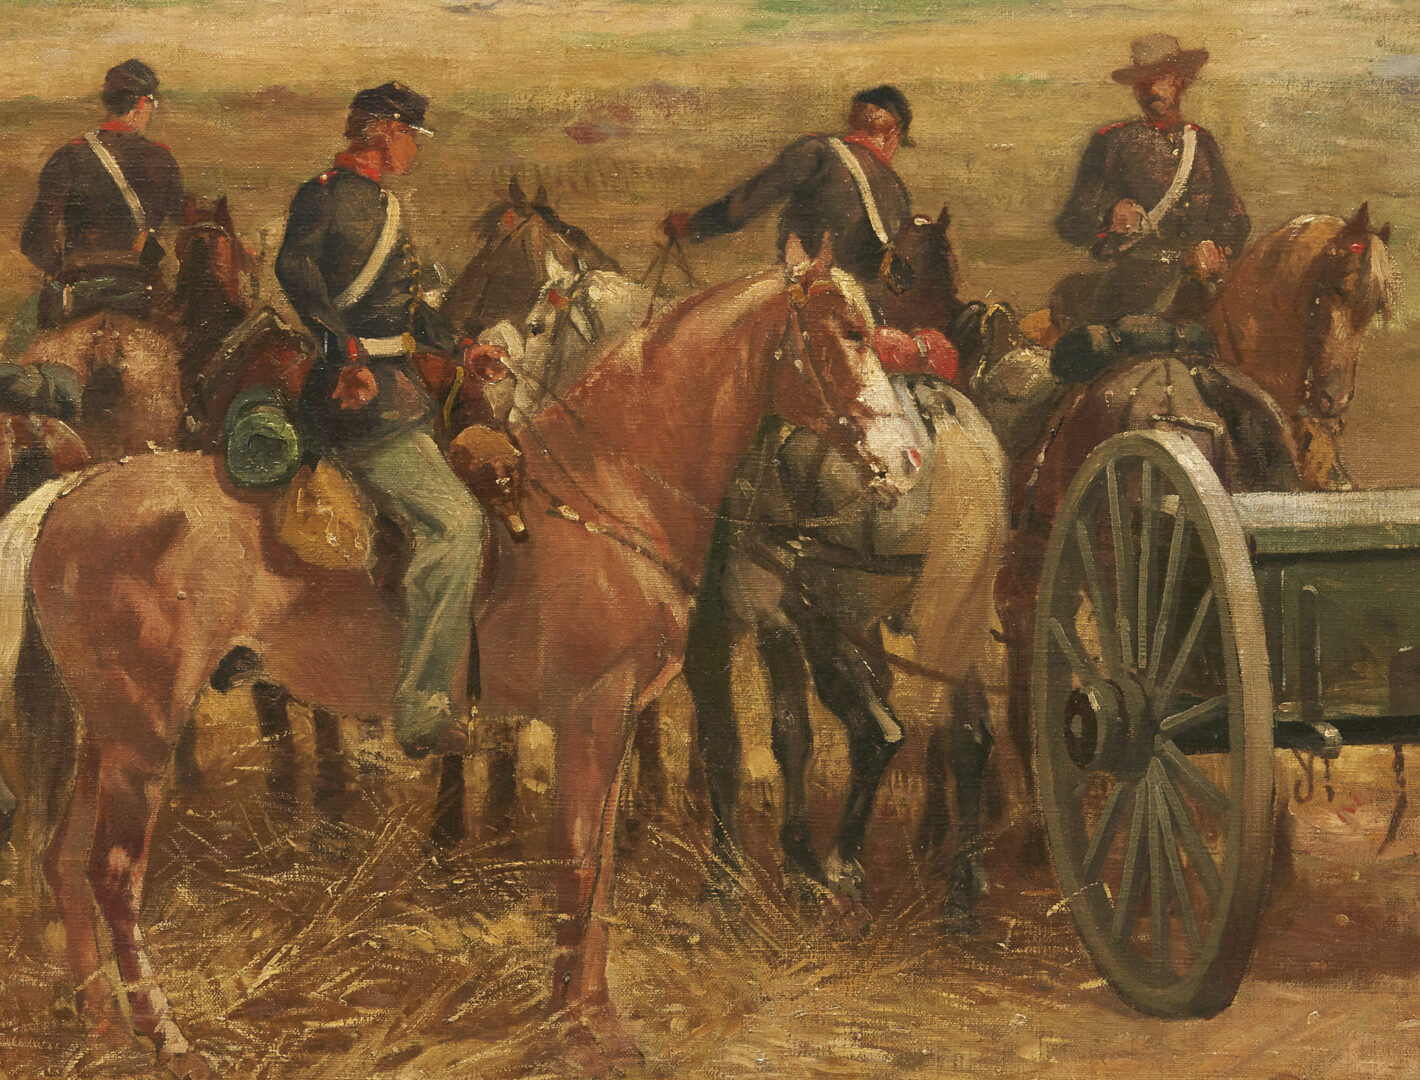 Lot 536: Large Civil War Scene, attrib. Paul Dominique Philippoteaux